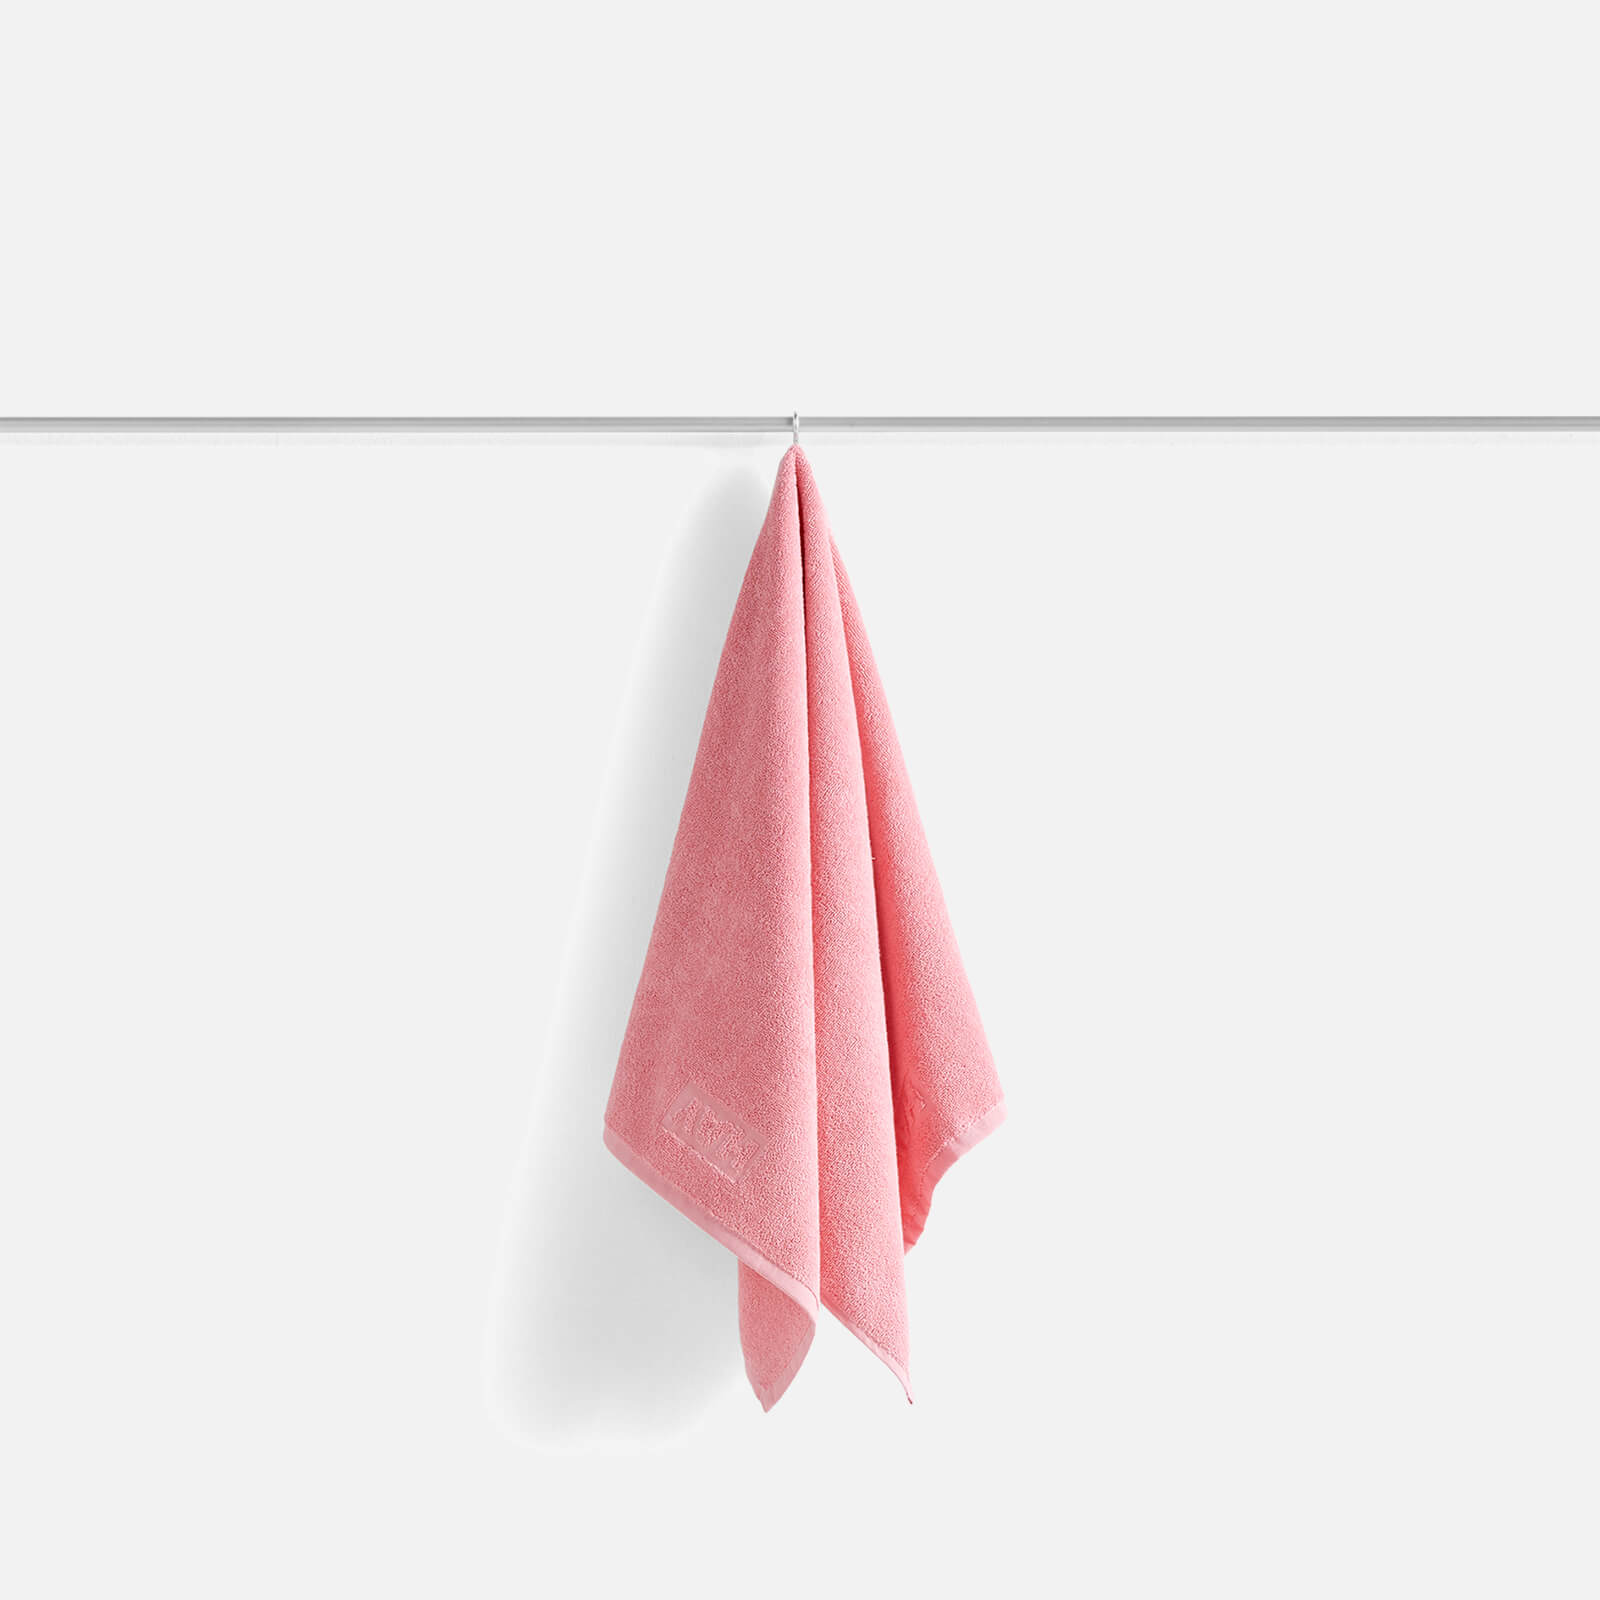 HAY Mono Towel - Pink - Hand